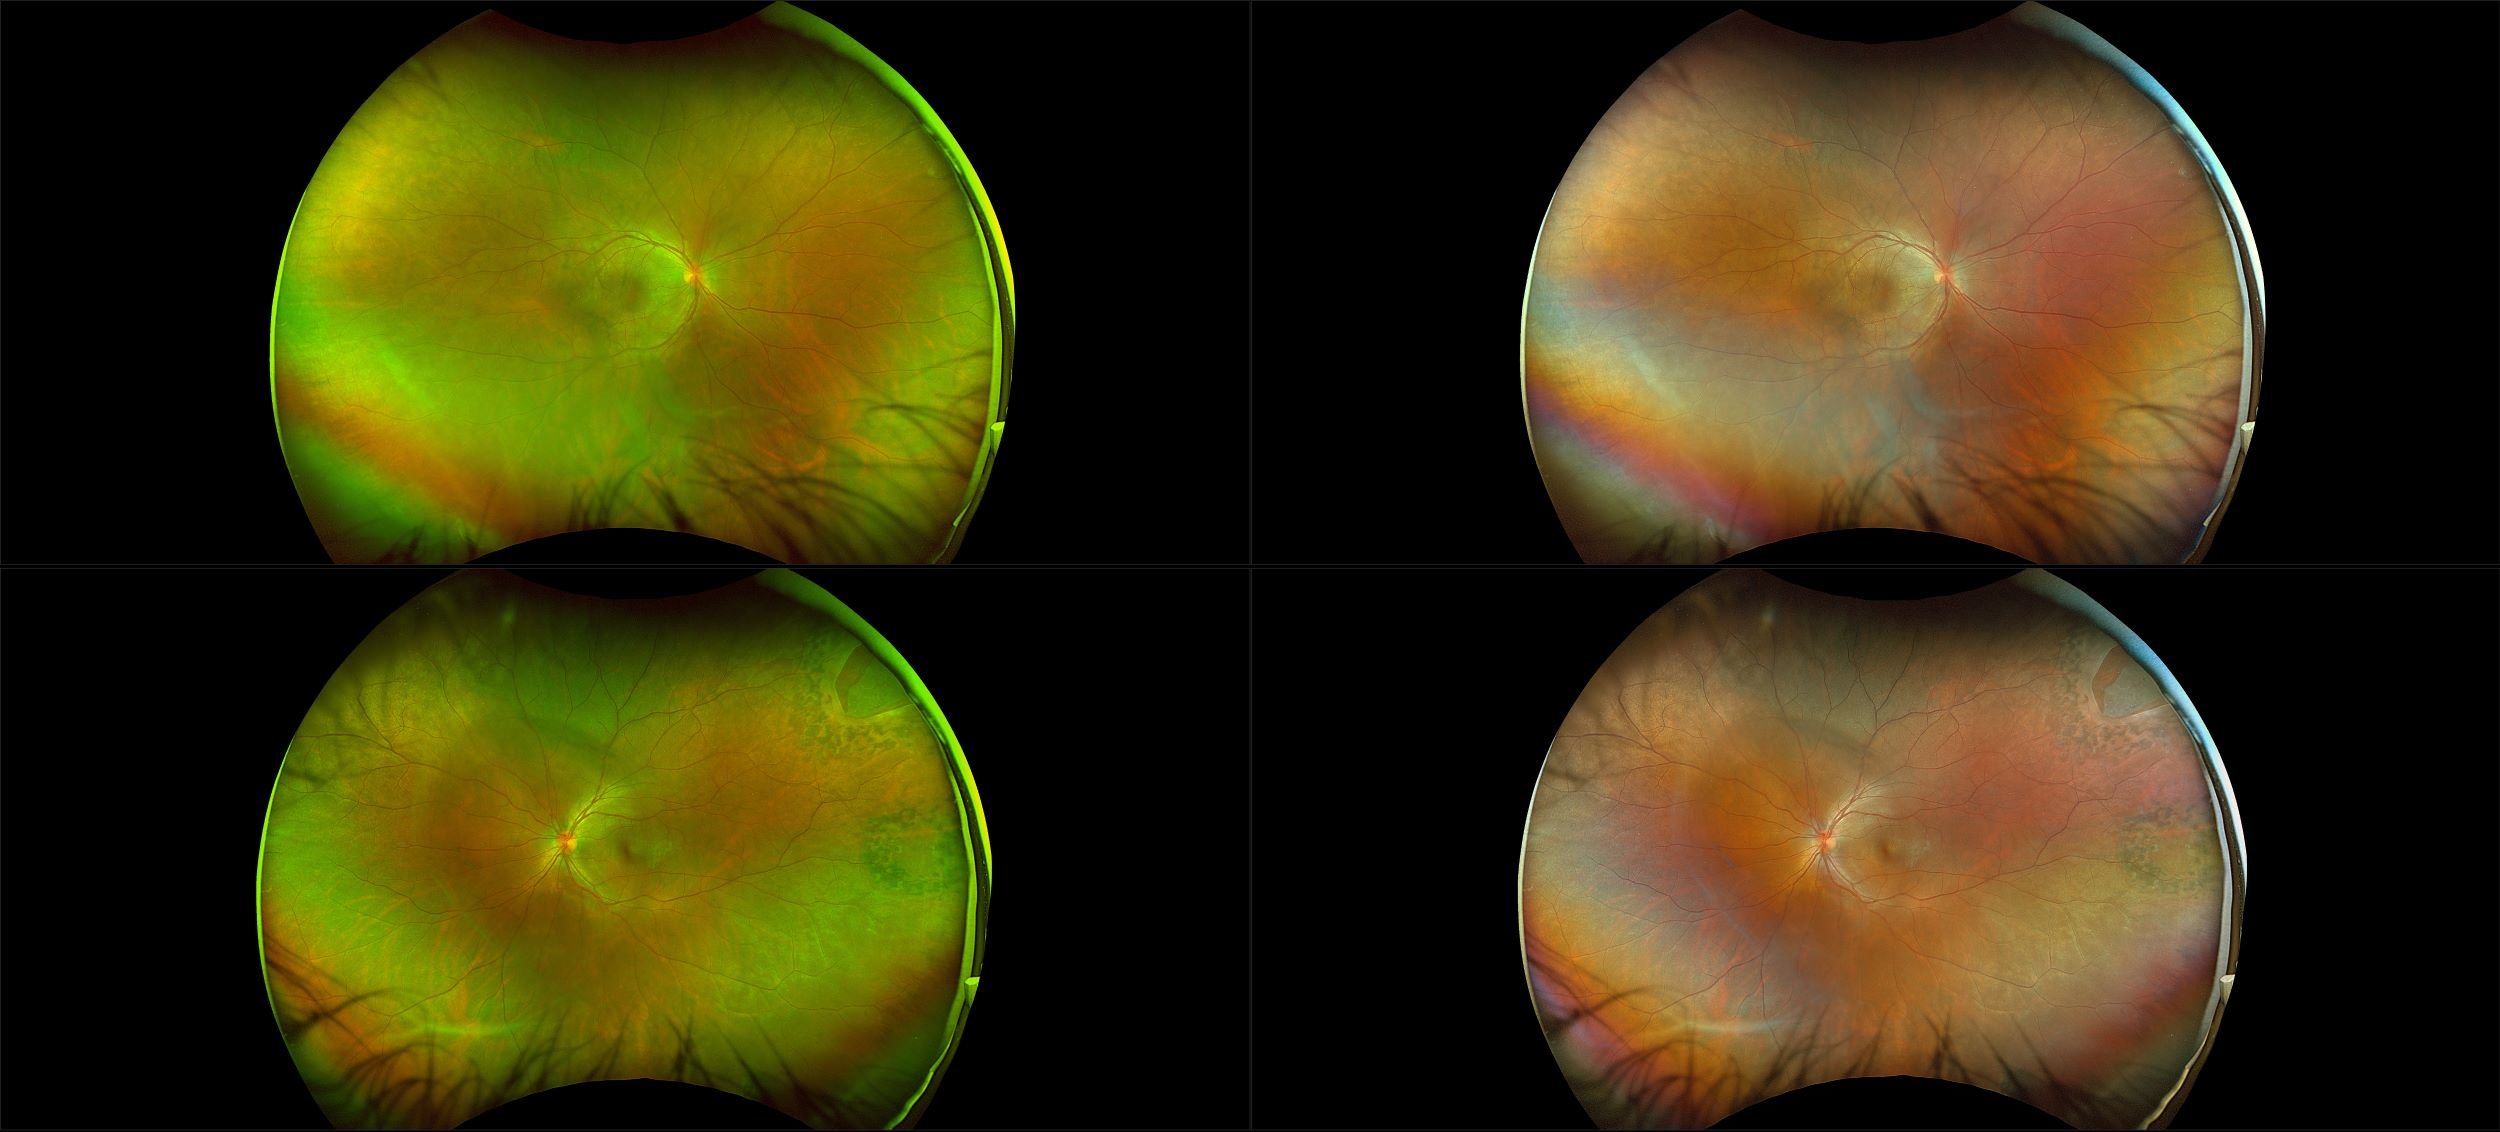 California - Retinal Tear with Posterior Uveitis, RG, RGB